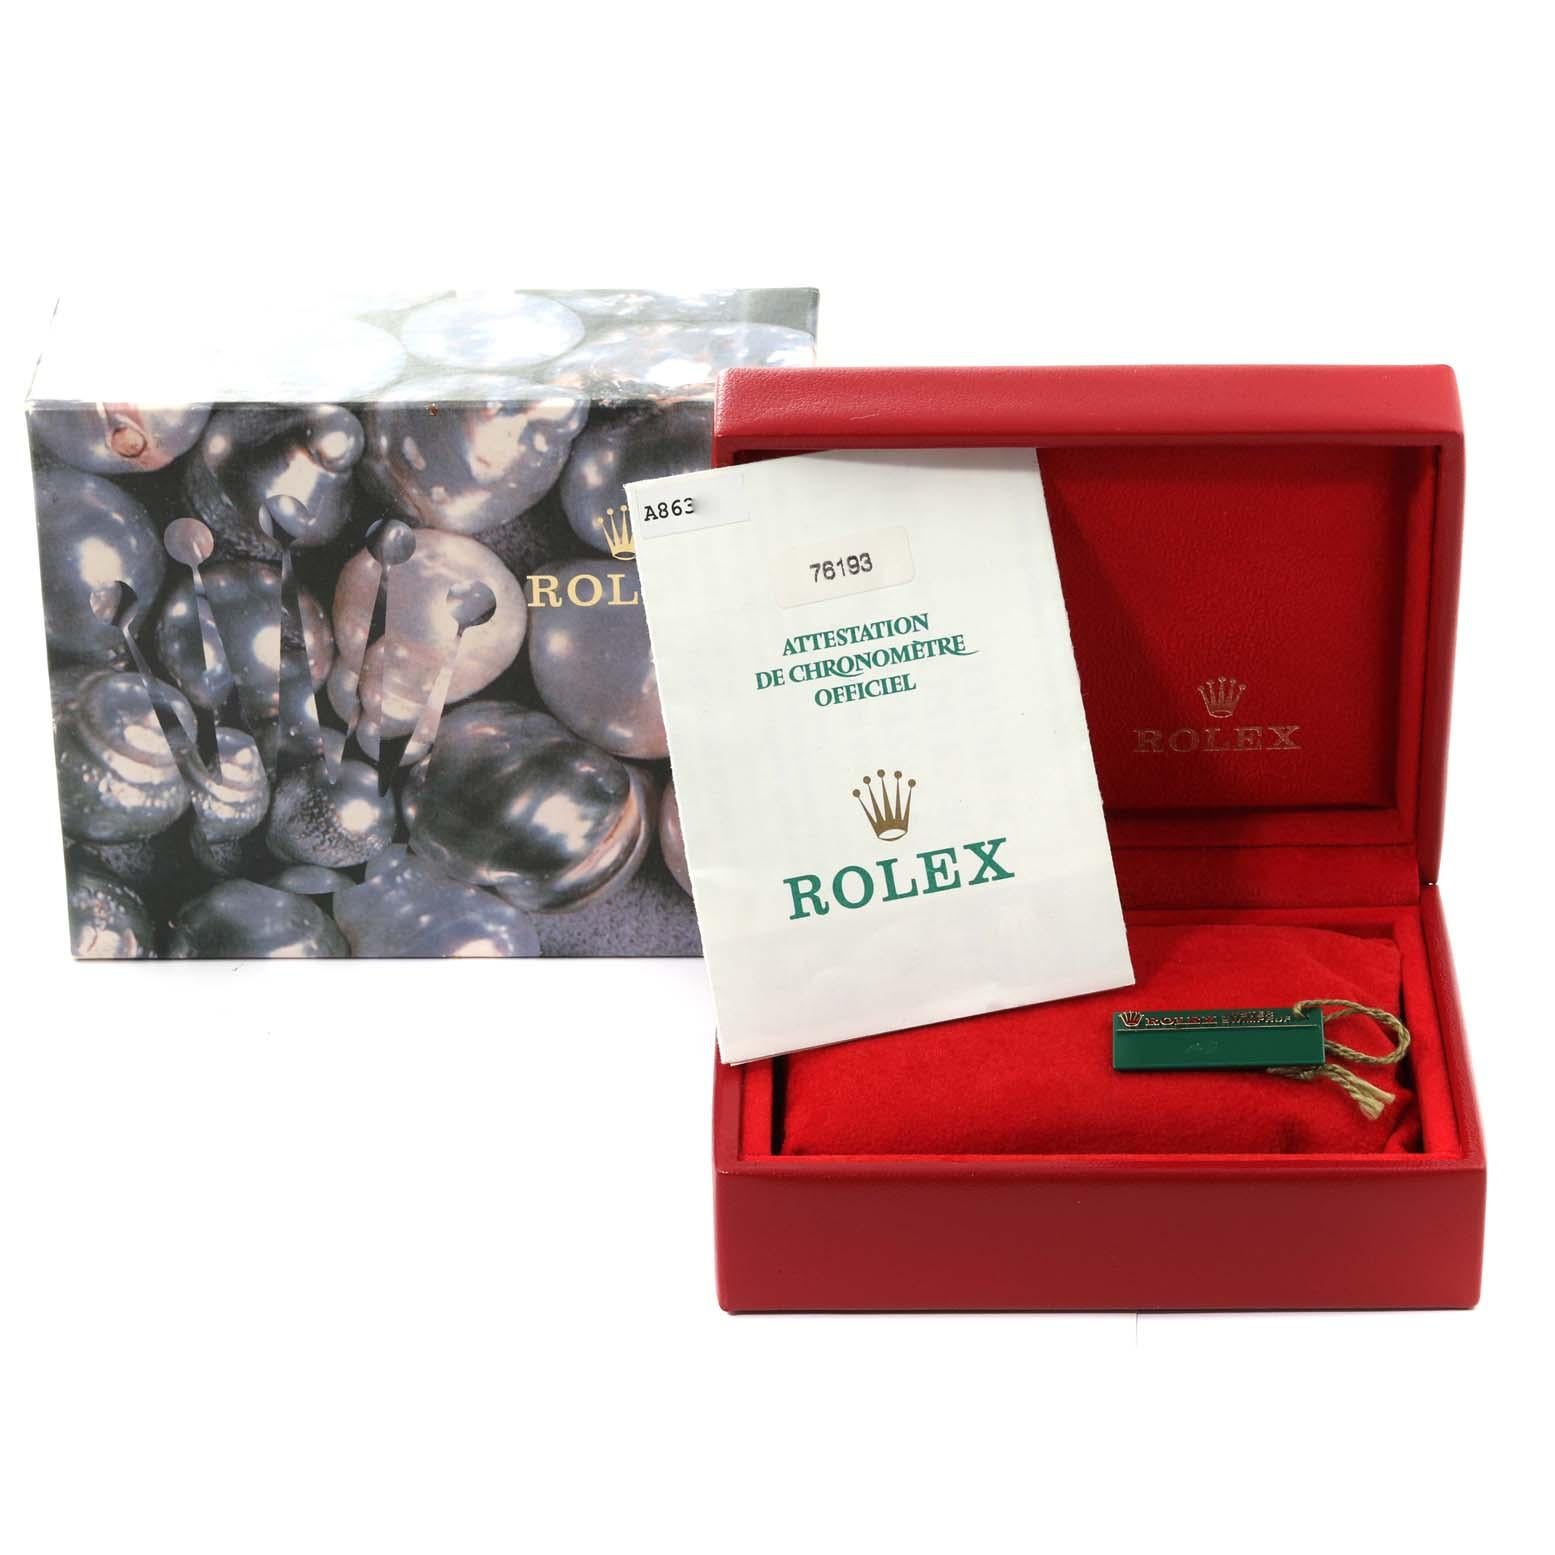 Rolex Oyster Perpetual Slate Zifferblatt Stahl Gelbgold Damenuhr 76193 Box Papier 8